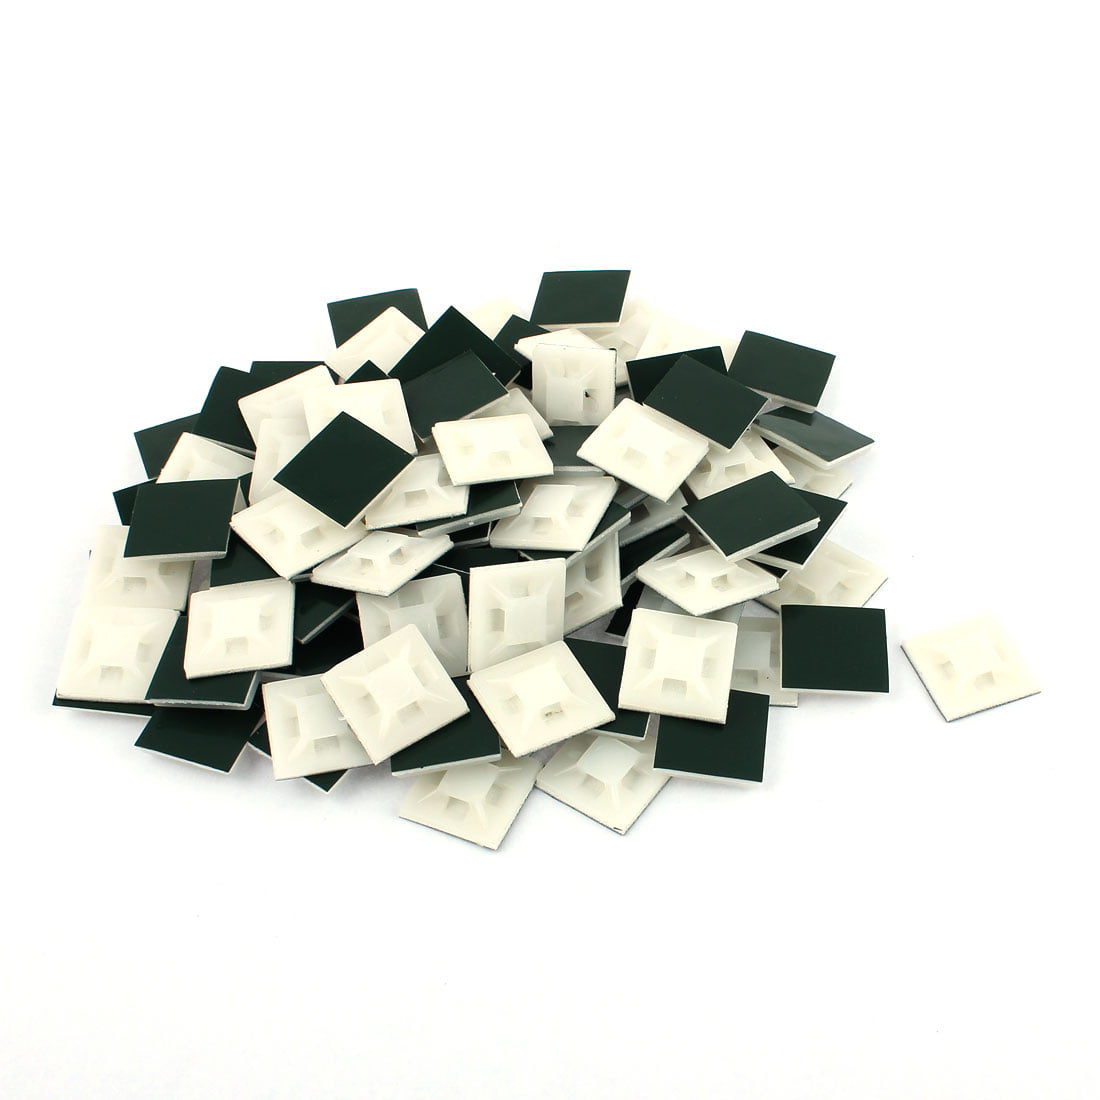 Aexit Square Shape Grommets Plastic Self-Adhesive Wire Tie Mount Bases Black Grommet Kits 200 PCS 